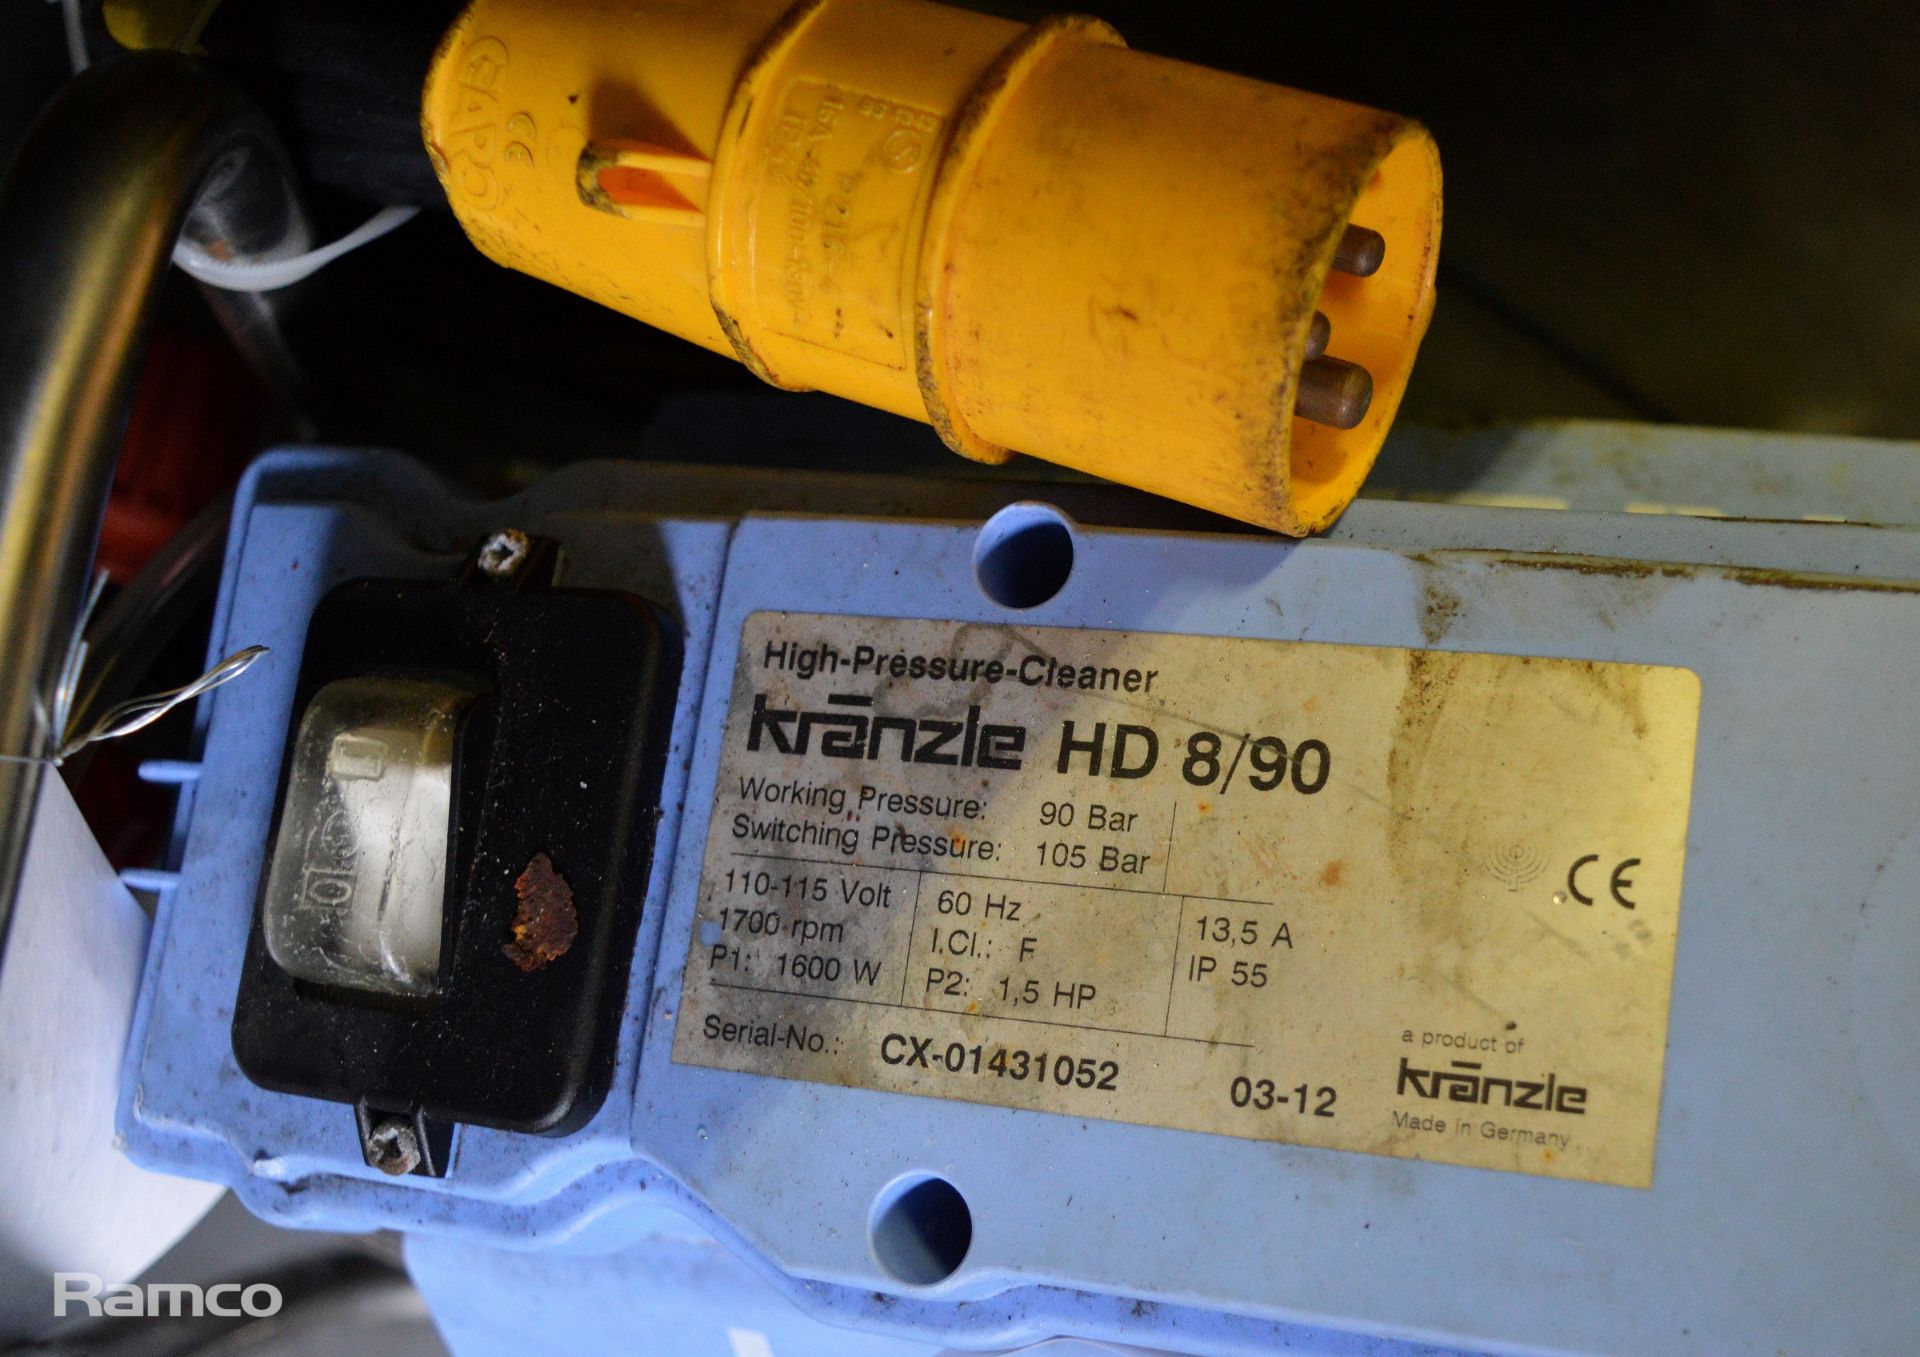 Kranzle HD-8/90 Small Pressure Washer - 110-115v - Image 5 of 5